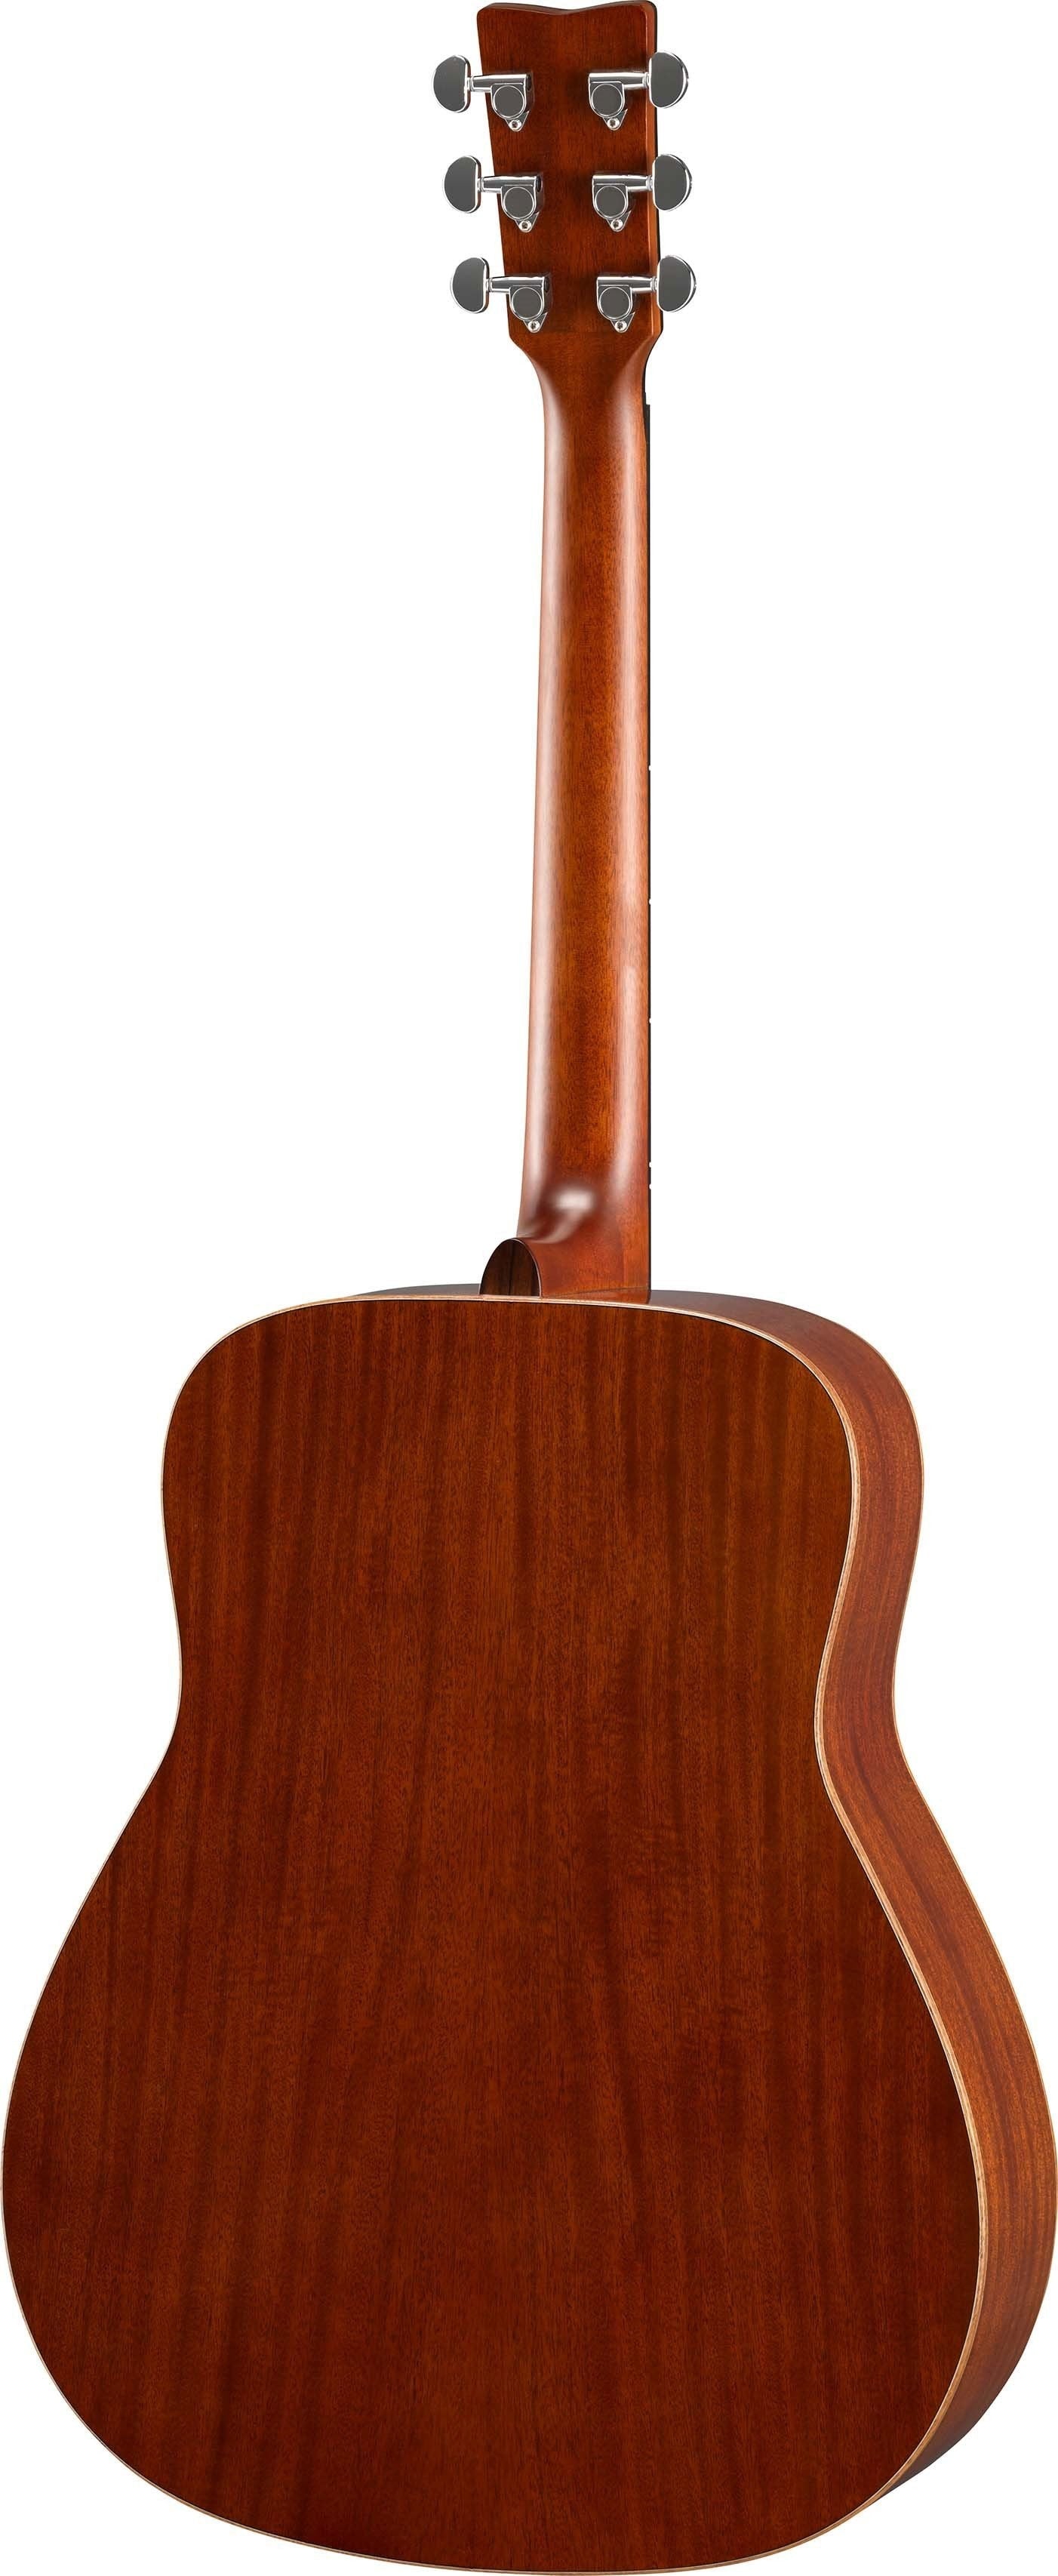 Yamaha FG850 Acoustic Guitar (Mahogany) 木結他